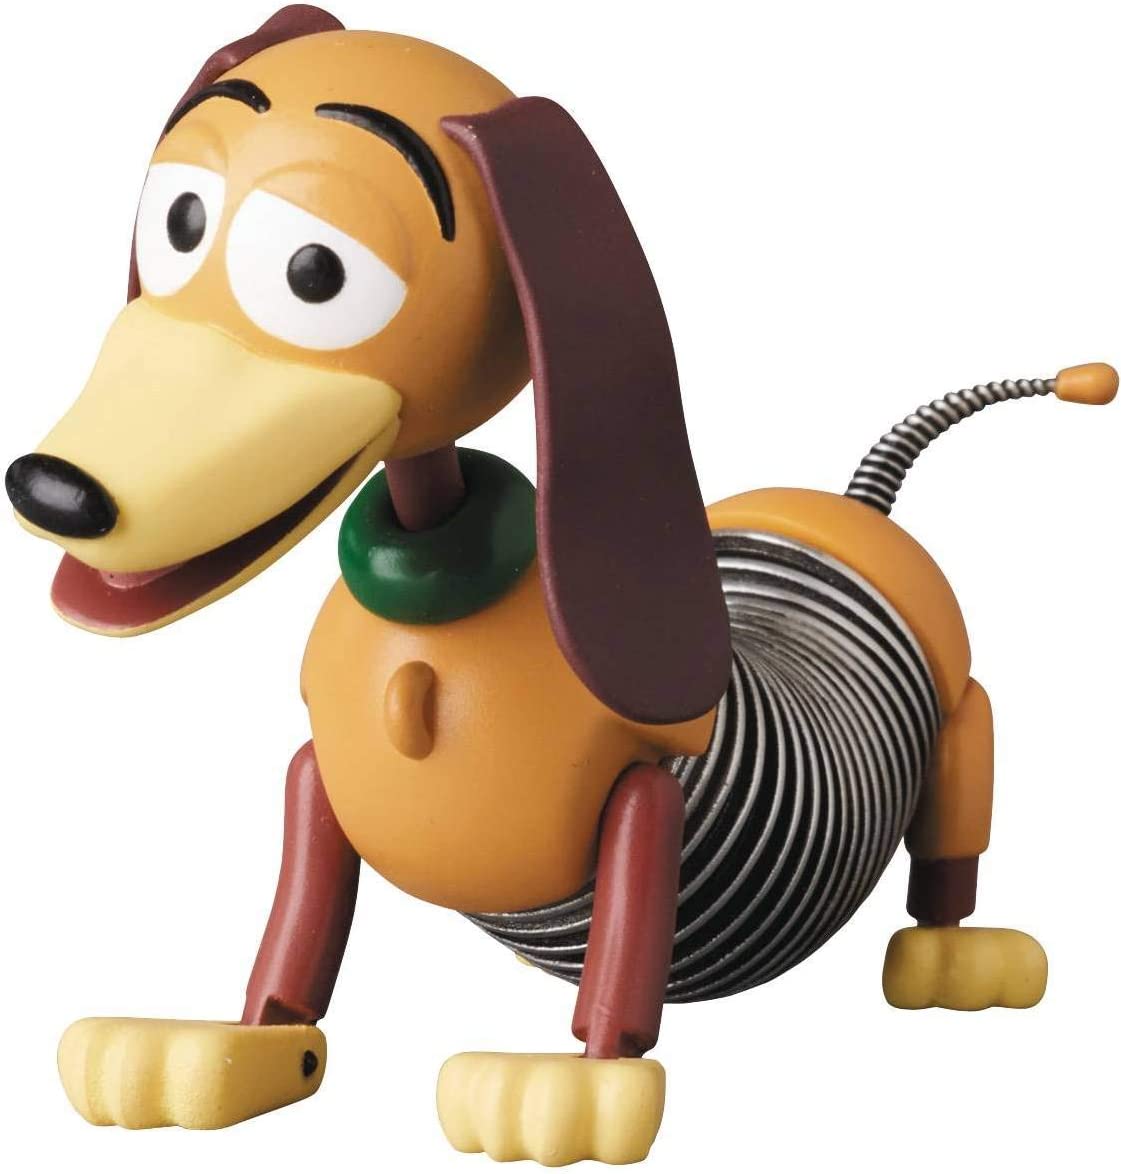 Toy Story (Ultra Detail Figure) Pixar Series 2 Slinky Dog in stock